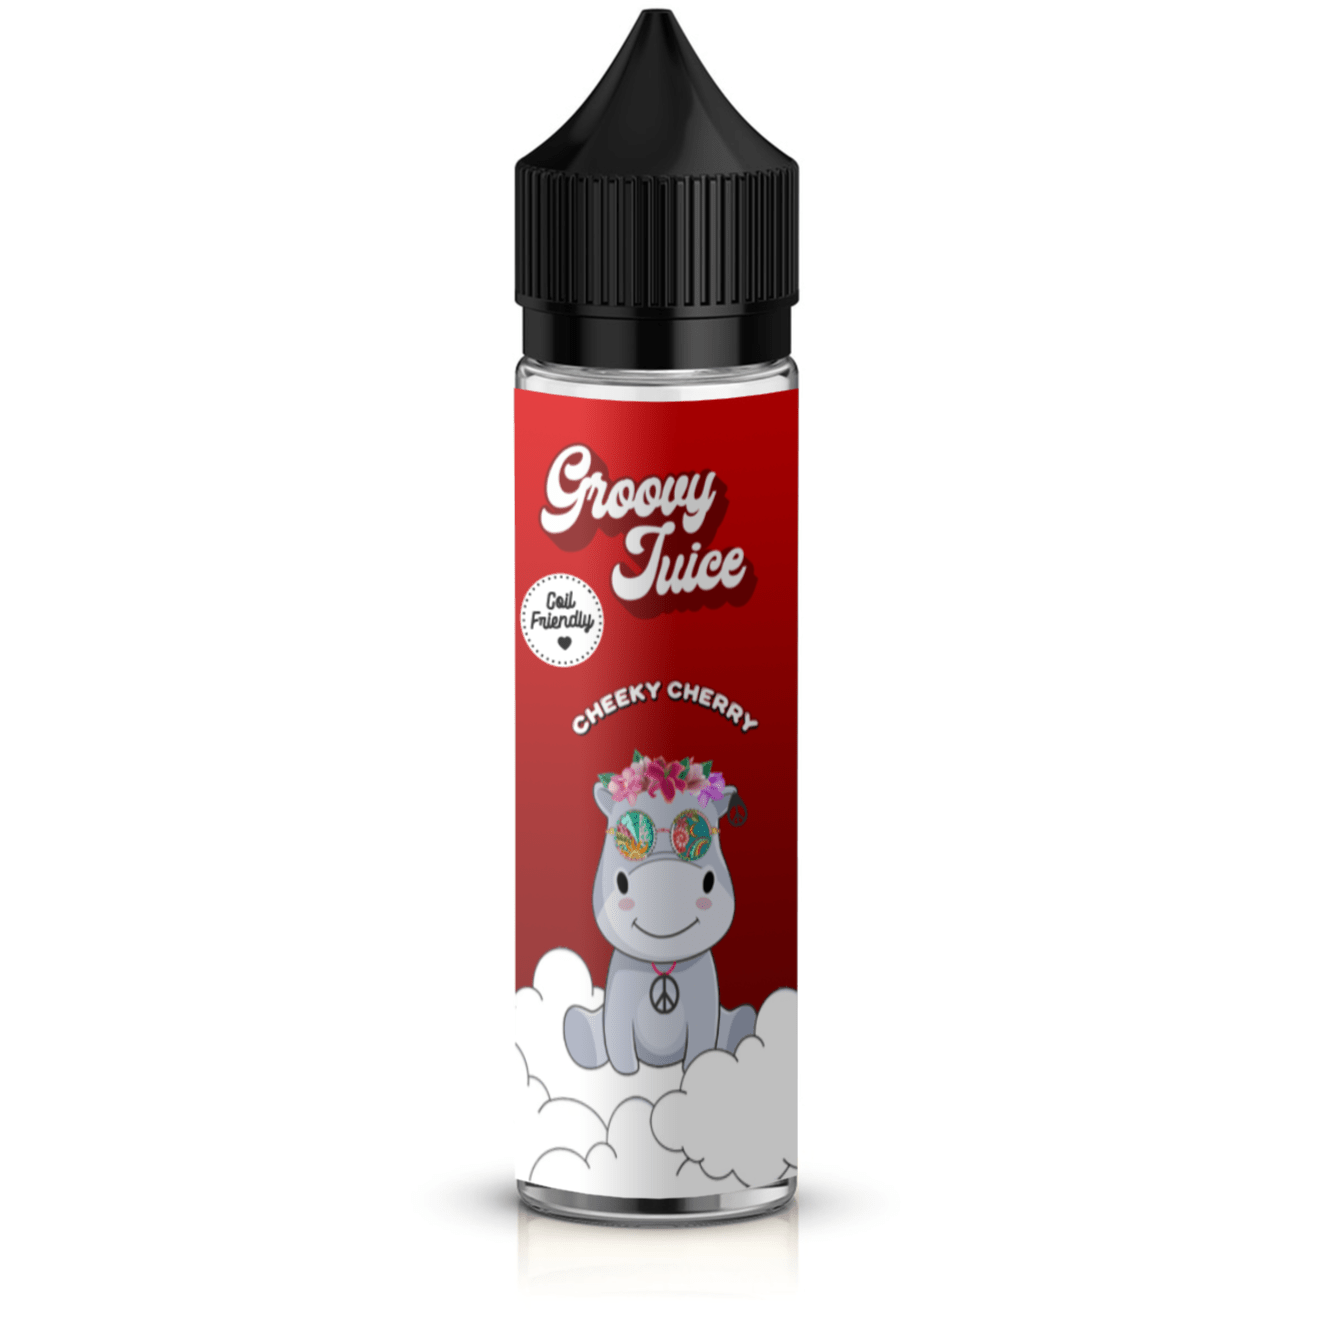 Groovy Juice - Cheeky Cherry 60ml Longfill E-Liquid - The British Vape Company